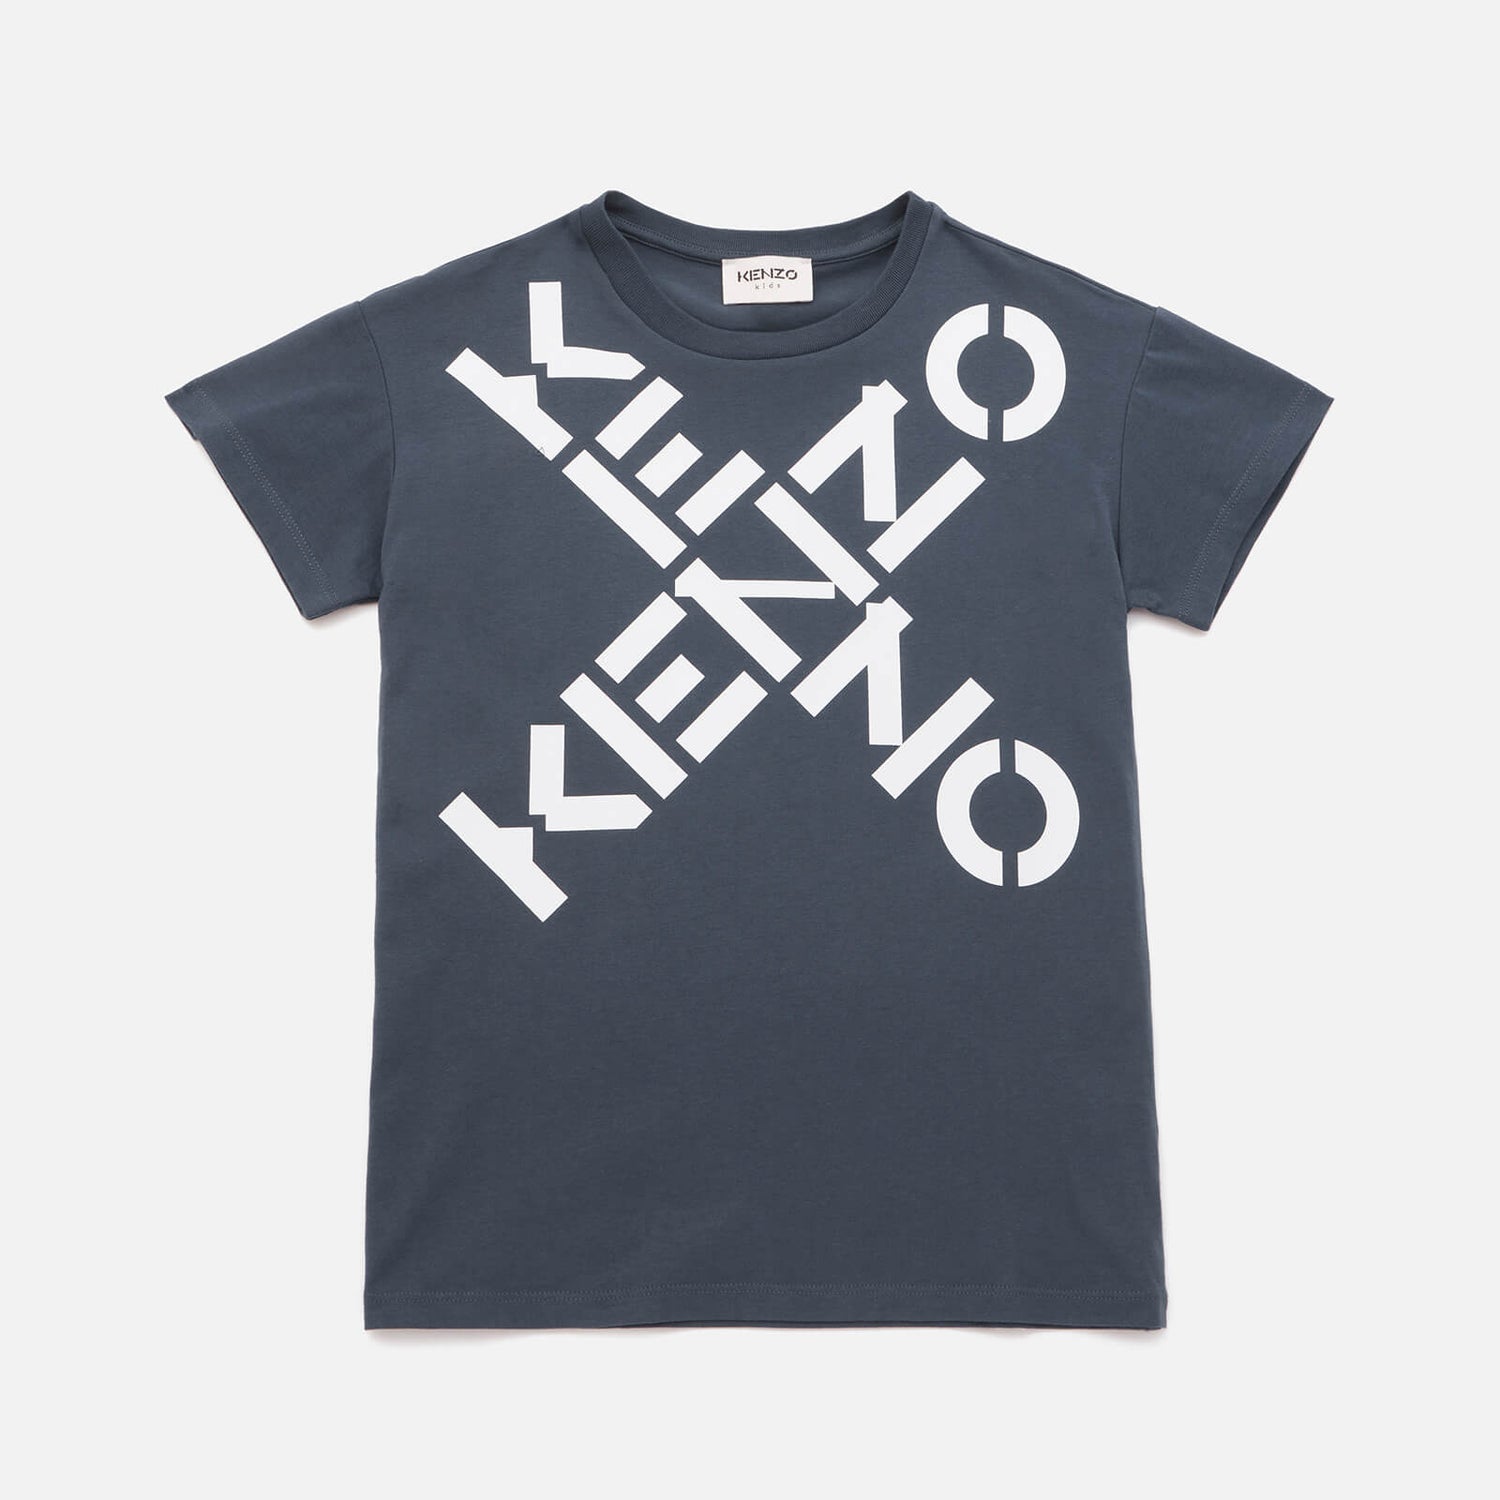 KENZO Boys' Logo T-Shirt - Charcoal Grey - 4 Years